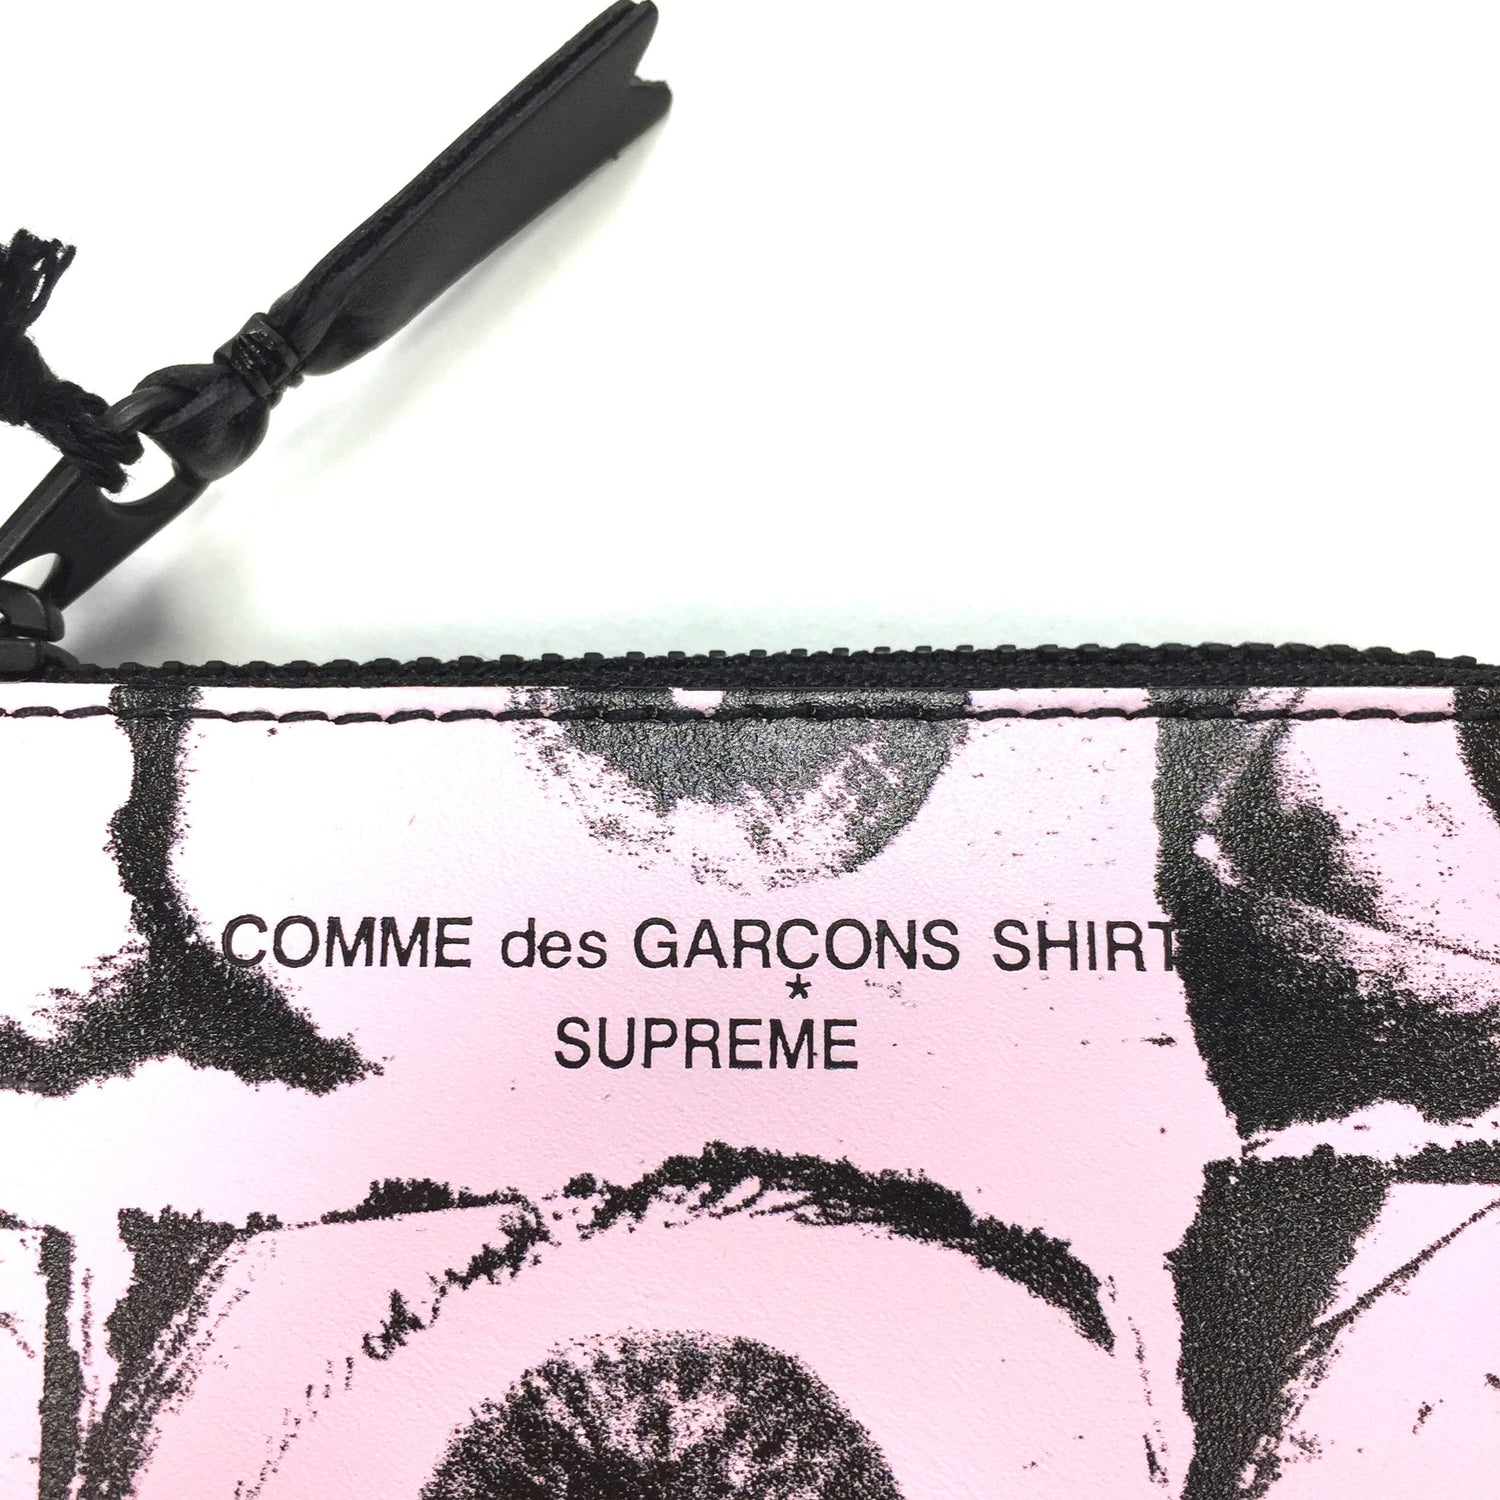 Supreme x Commes Des Garcons Red Zip Wallet — Roots